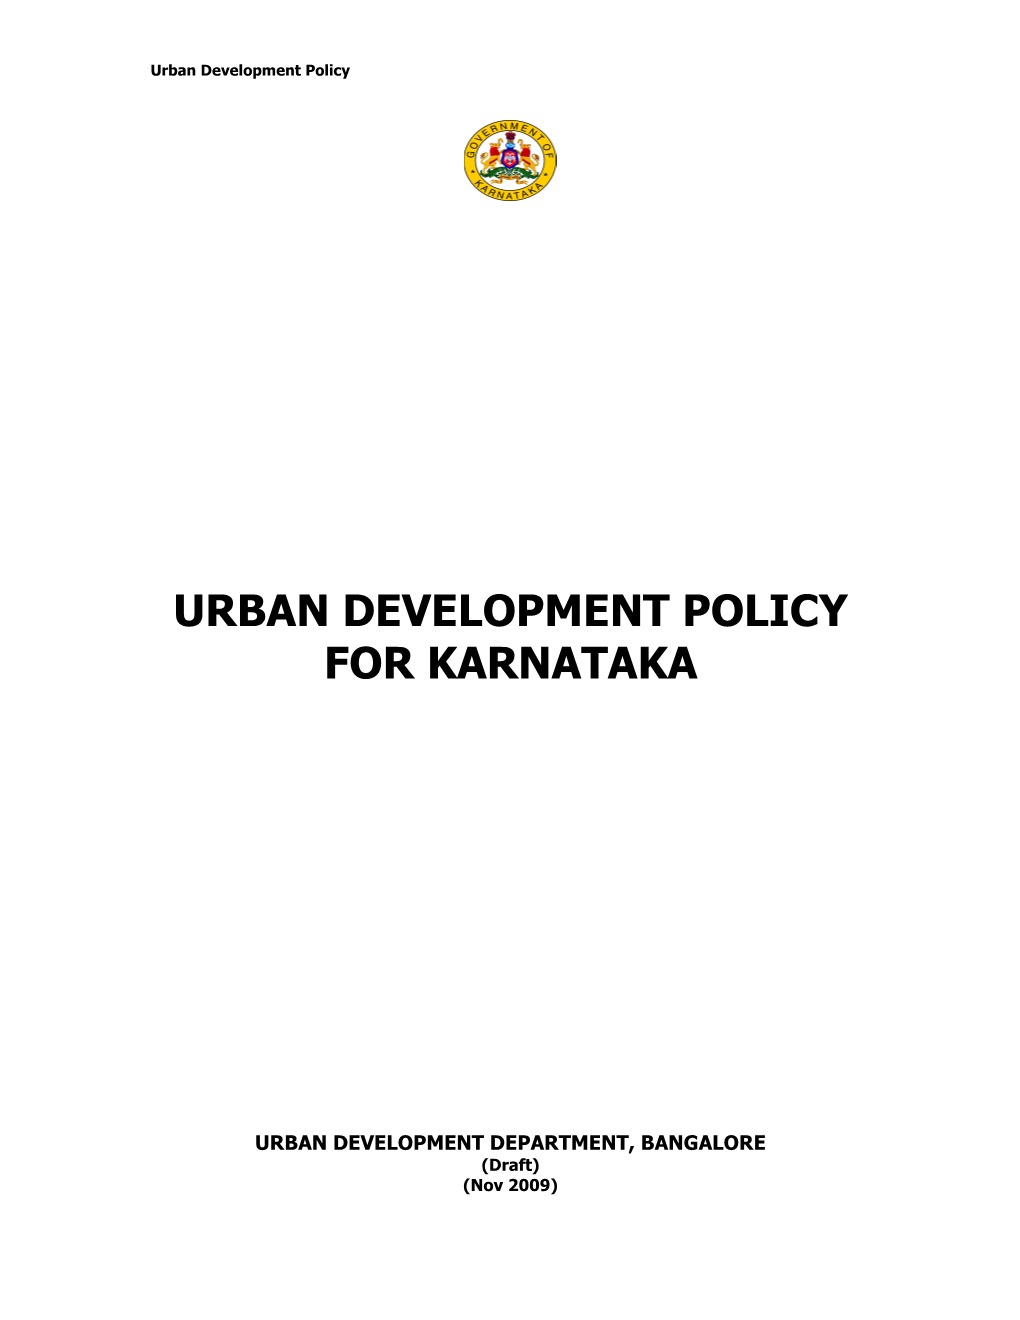 Urban Development Policy for Karnataka